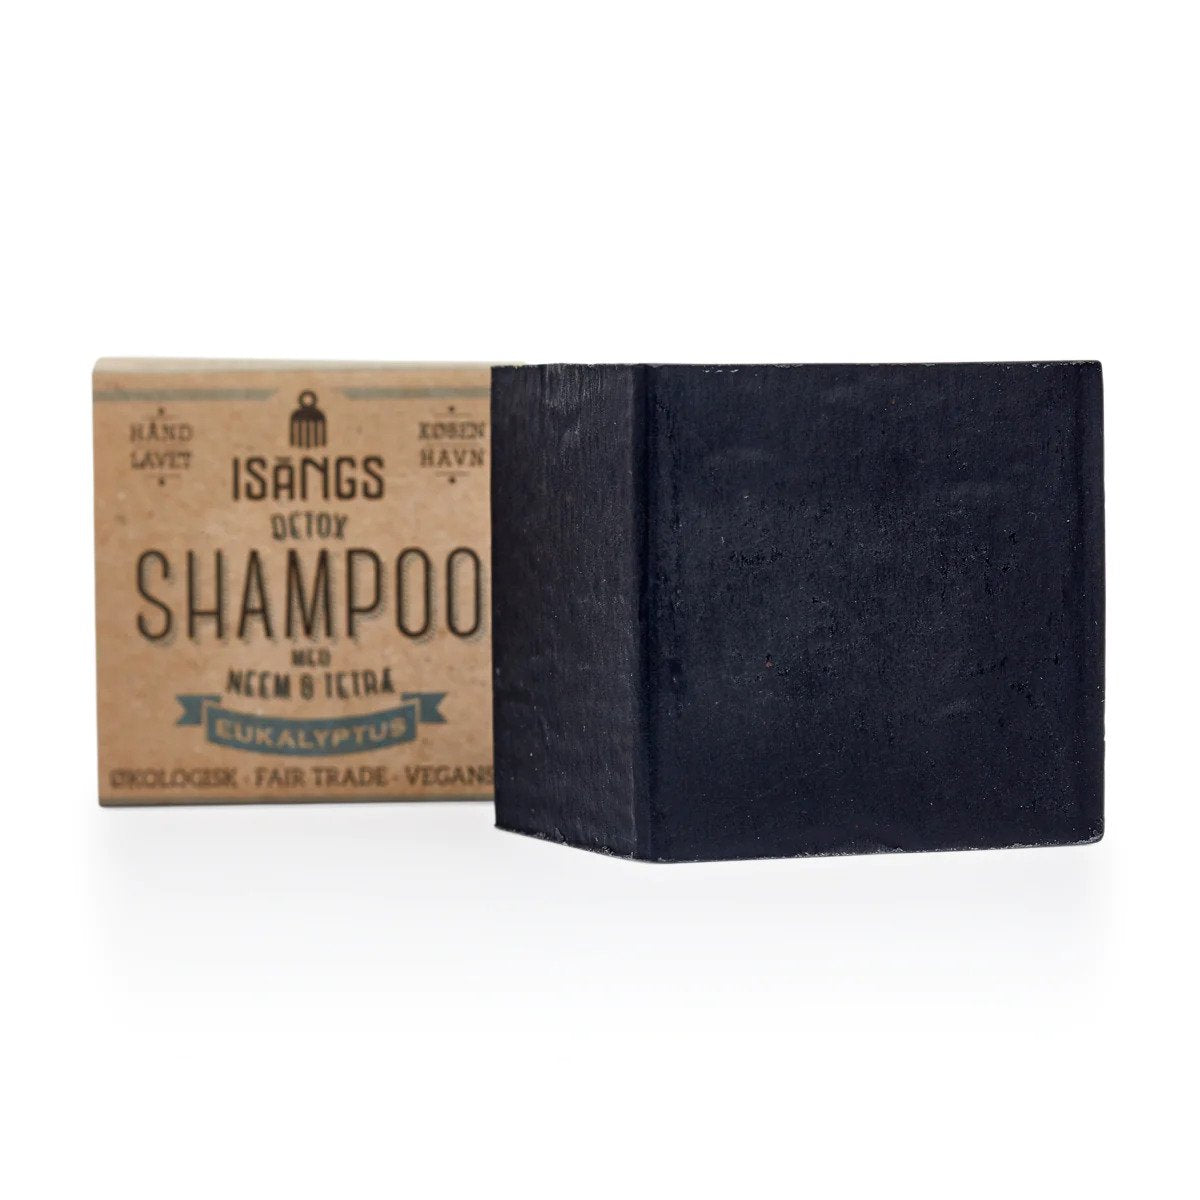 Isangs Detox Shampoo | Eukalyptus